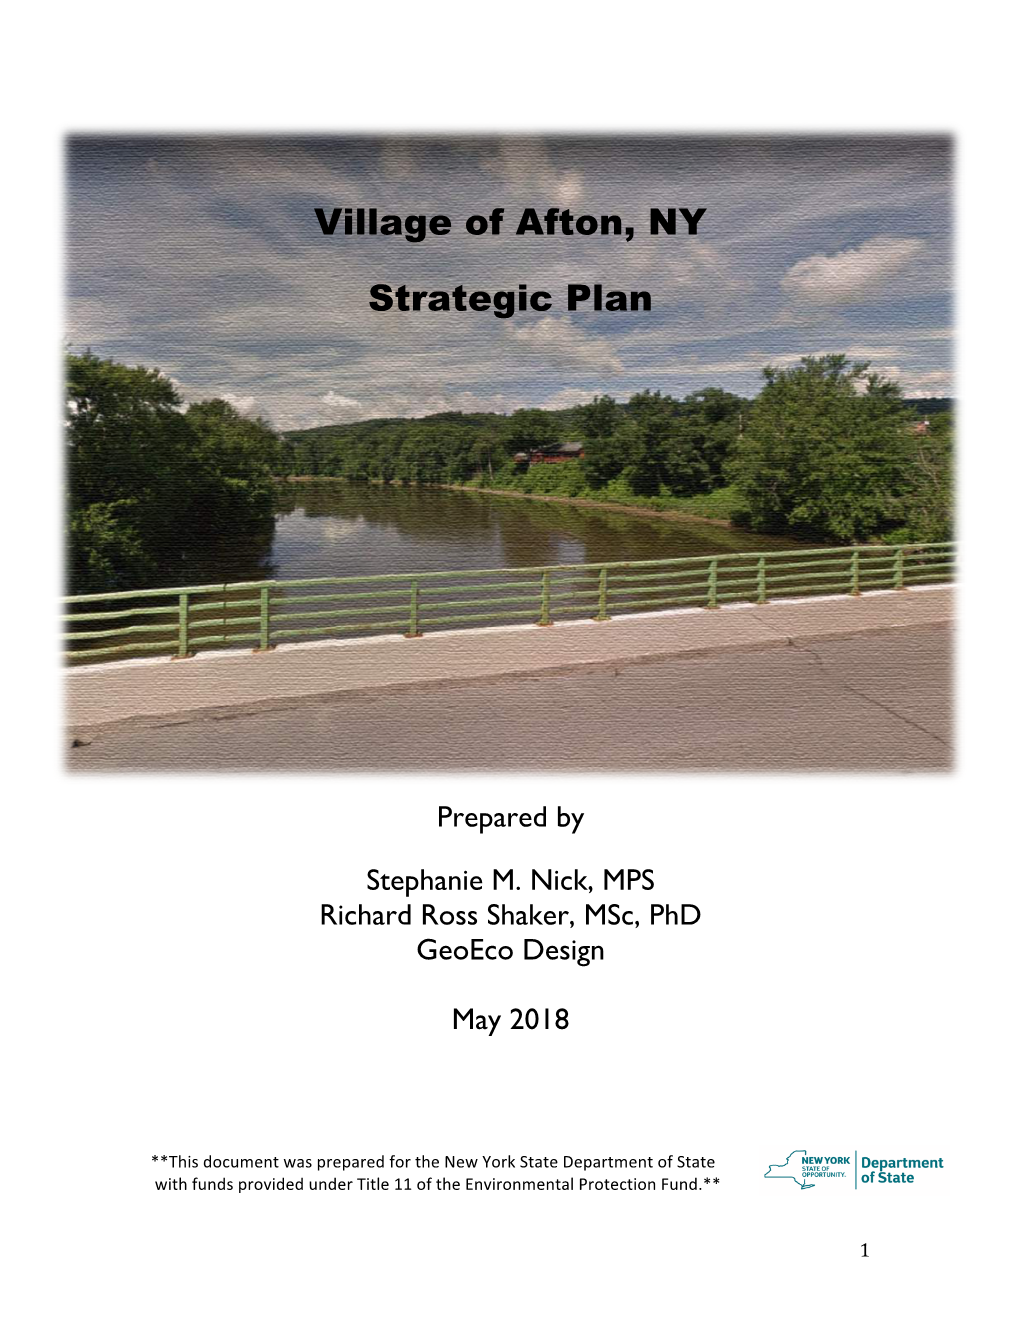 Village of Afton, NY Strategic Plan